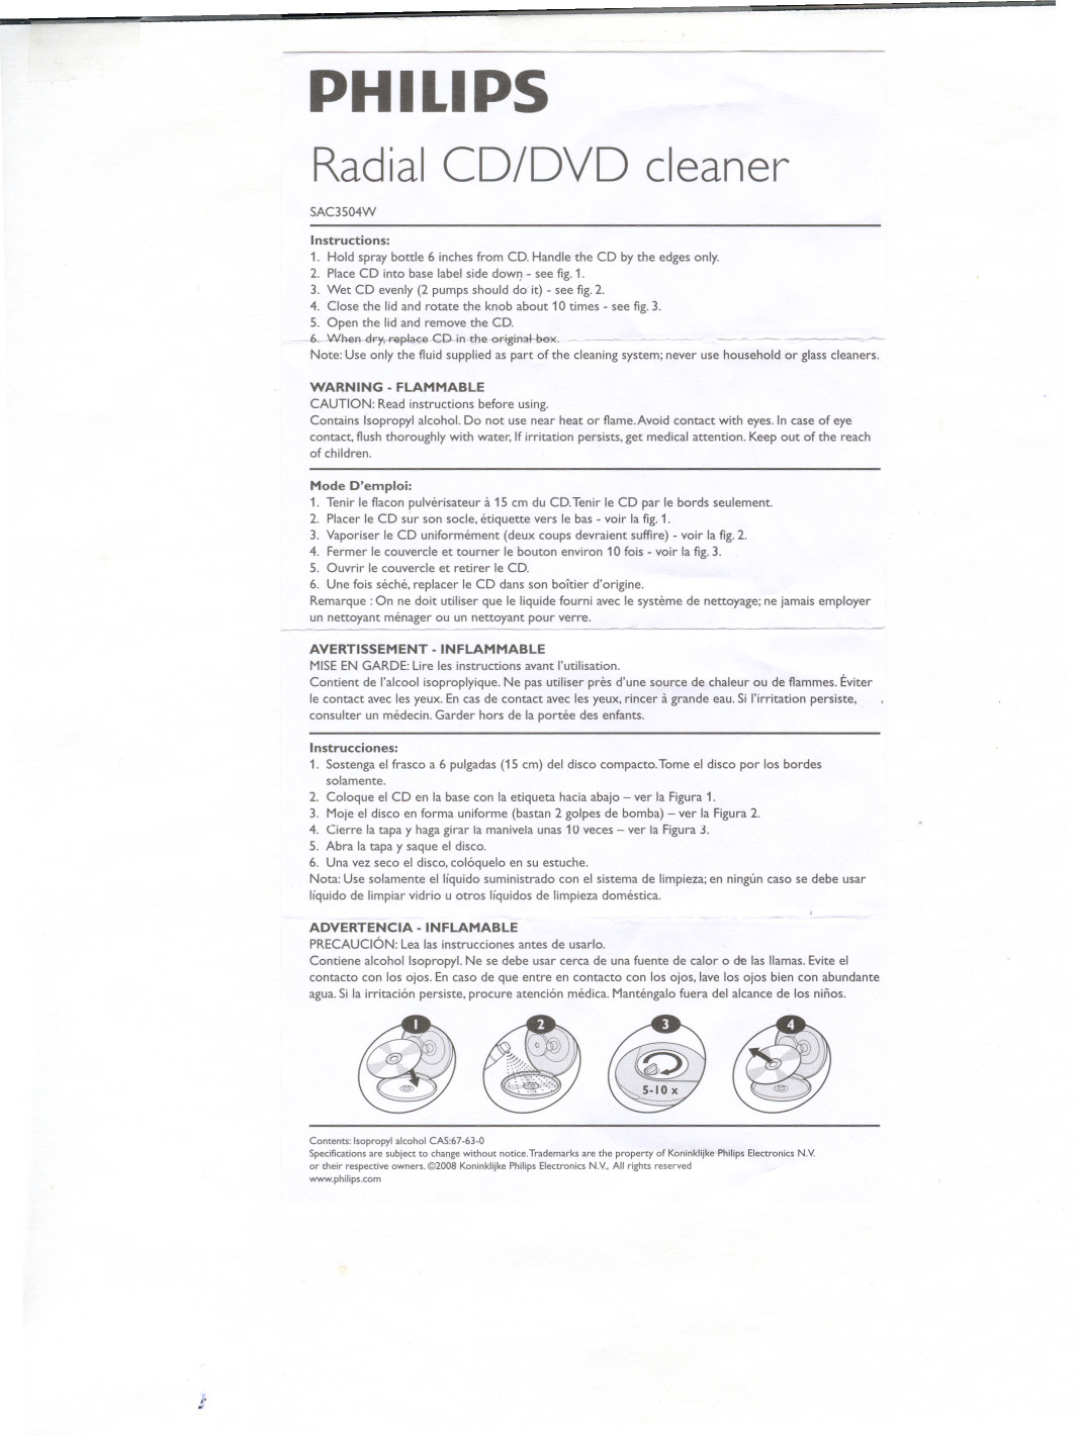 Philips SAC3S04W manual ~~~~@ - ~, Philips, RadialCD/DVD cleaner 